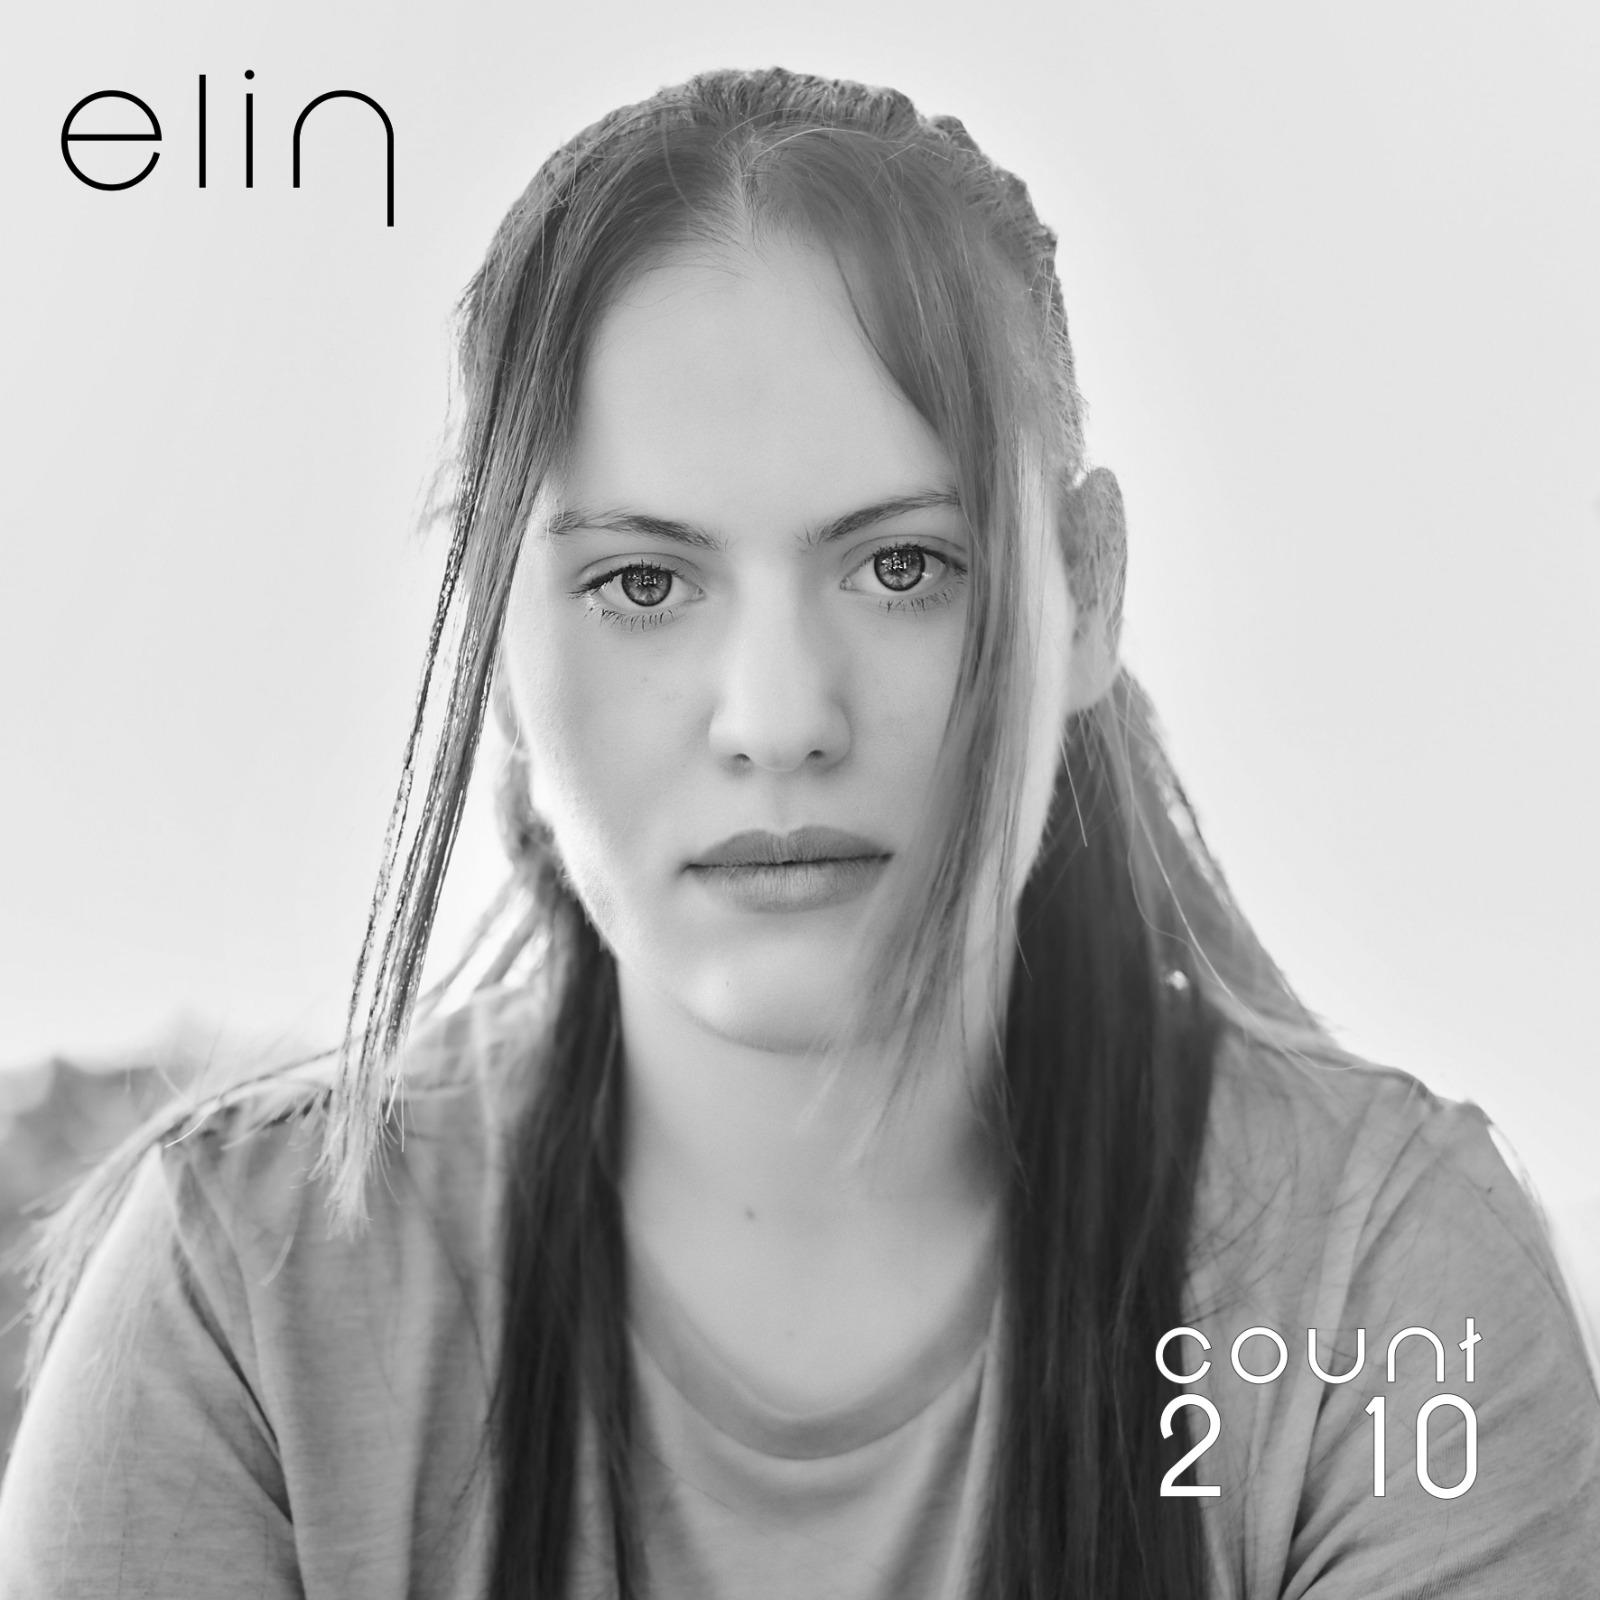 Count 2 10 - Elin